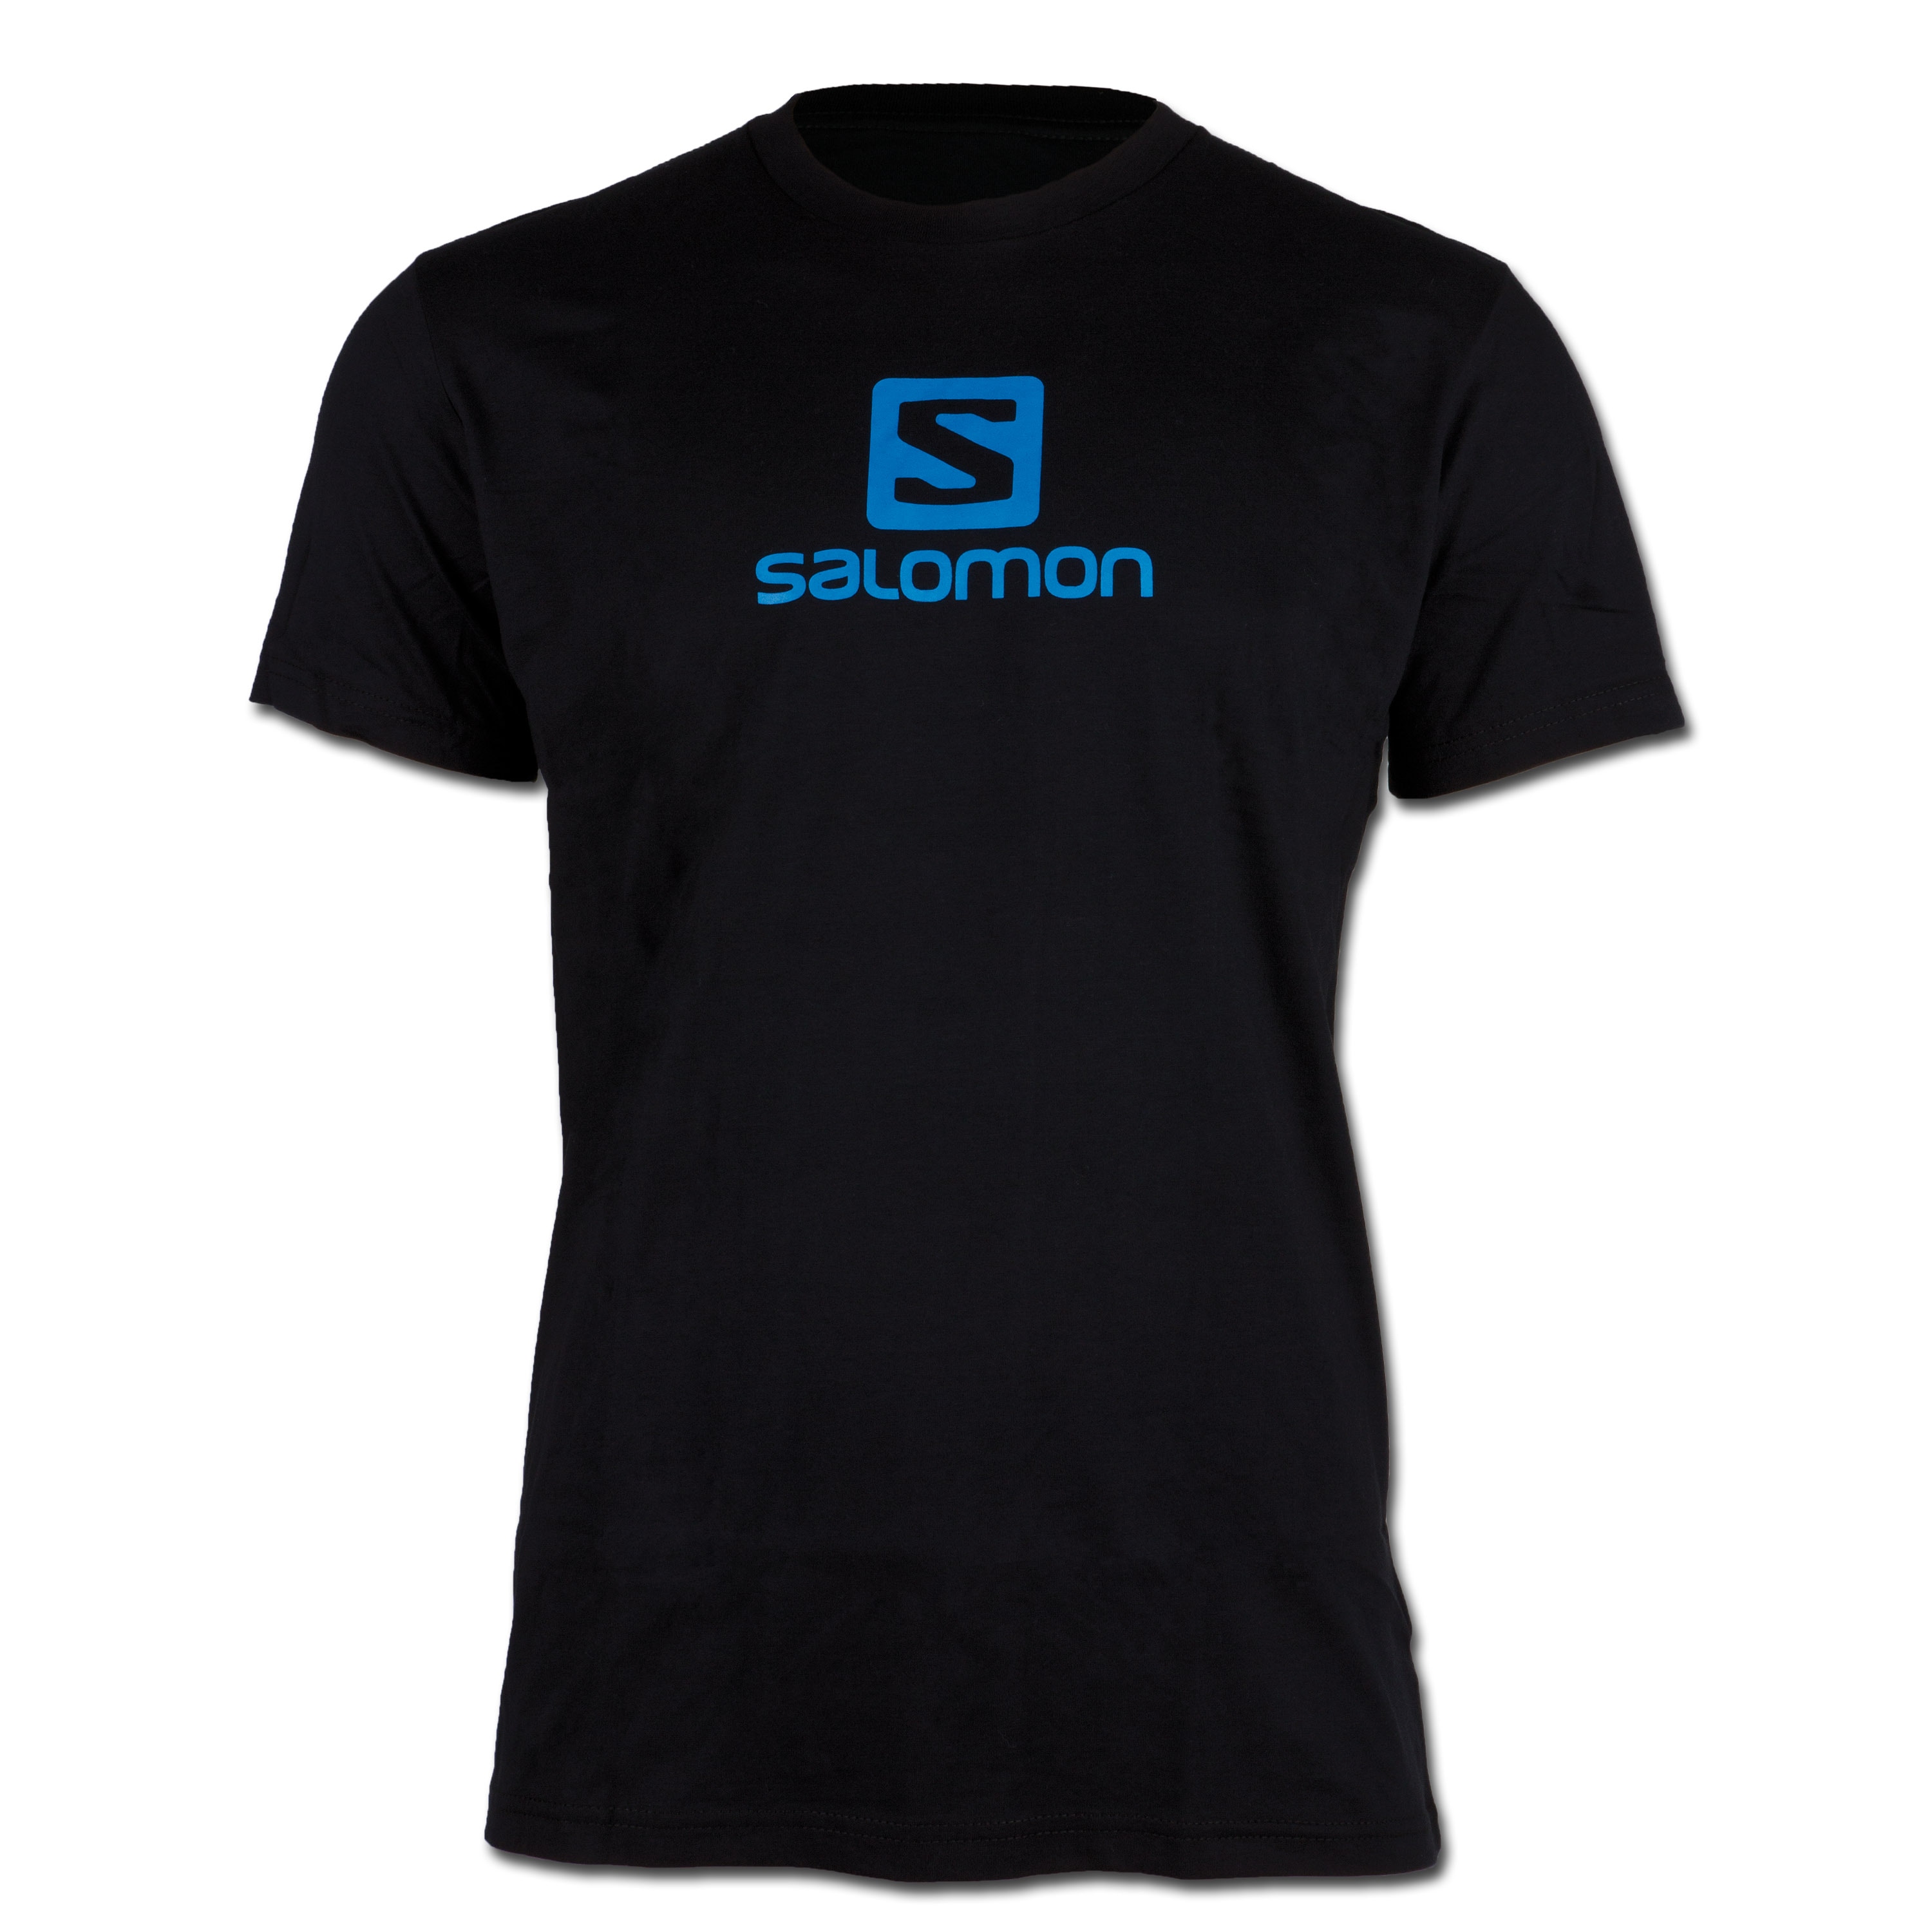 Mutual mistaken entry Salomon T- Shirt Cotton Tee black | Salomon T- Shirt Cotton Tee black |  Shirts | Shirts | Men | Clothing